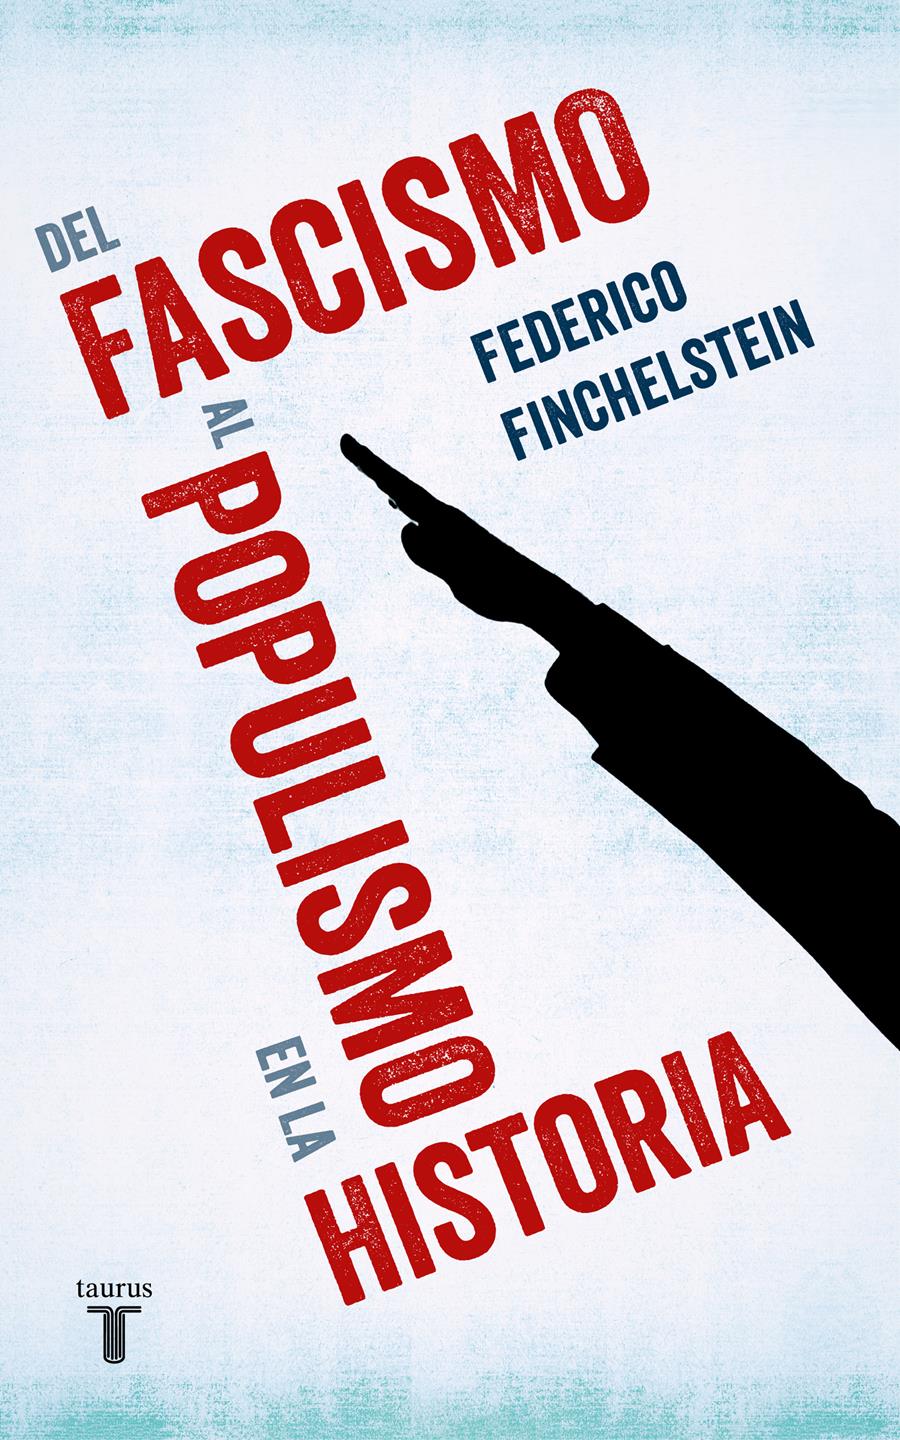 Del fascismo al populismo en la historia | Finchelstein, Federico | Cooperativa autogestionària